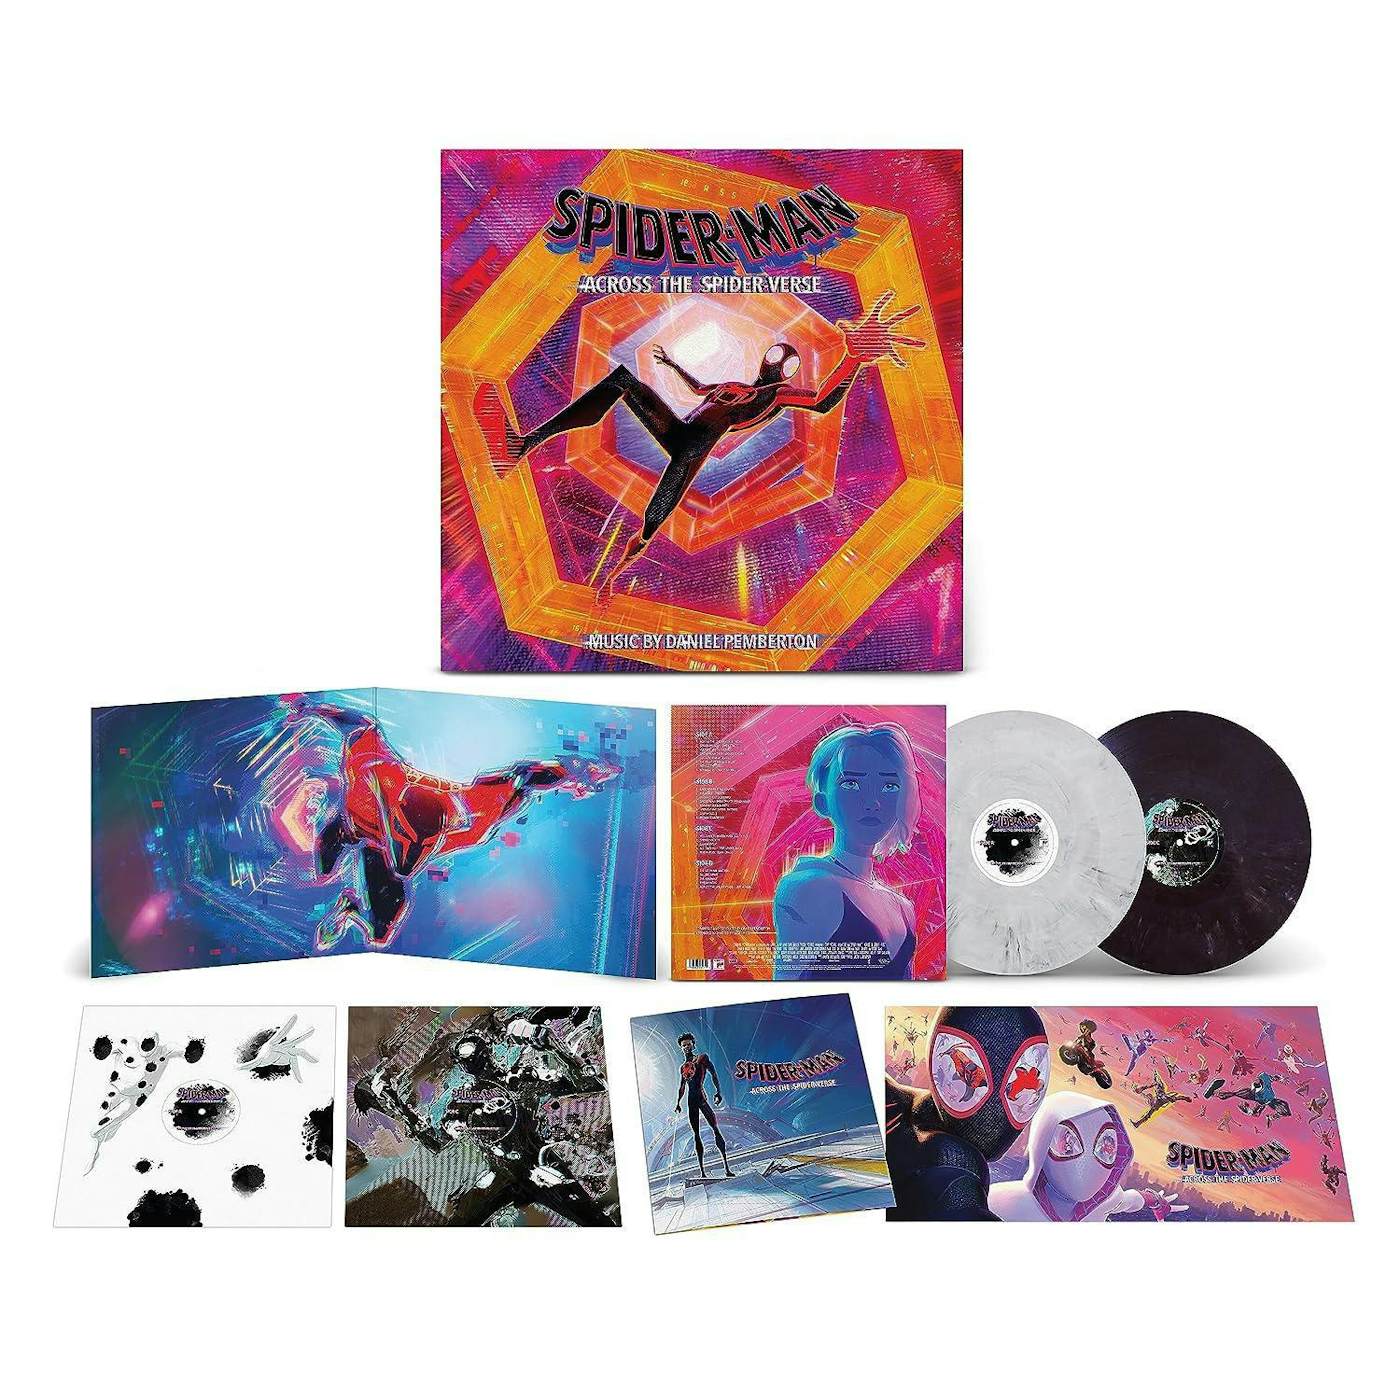 Wednesday- Exclusive Colour Vinyl- USA=Netflix Soundtrack.DANNY